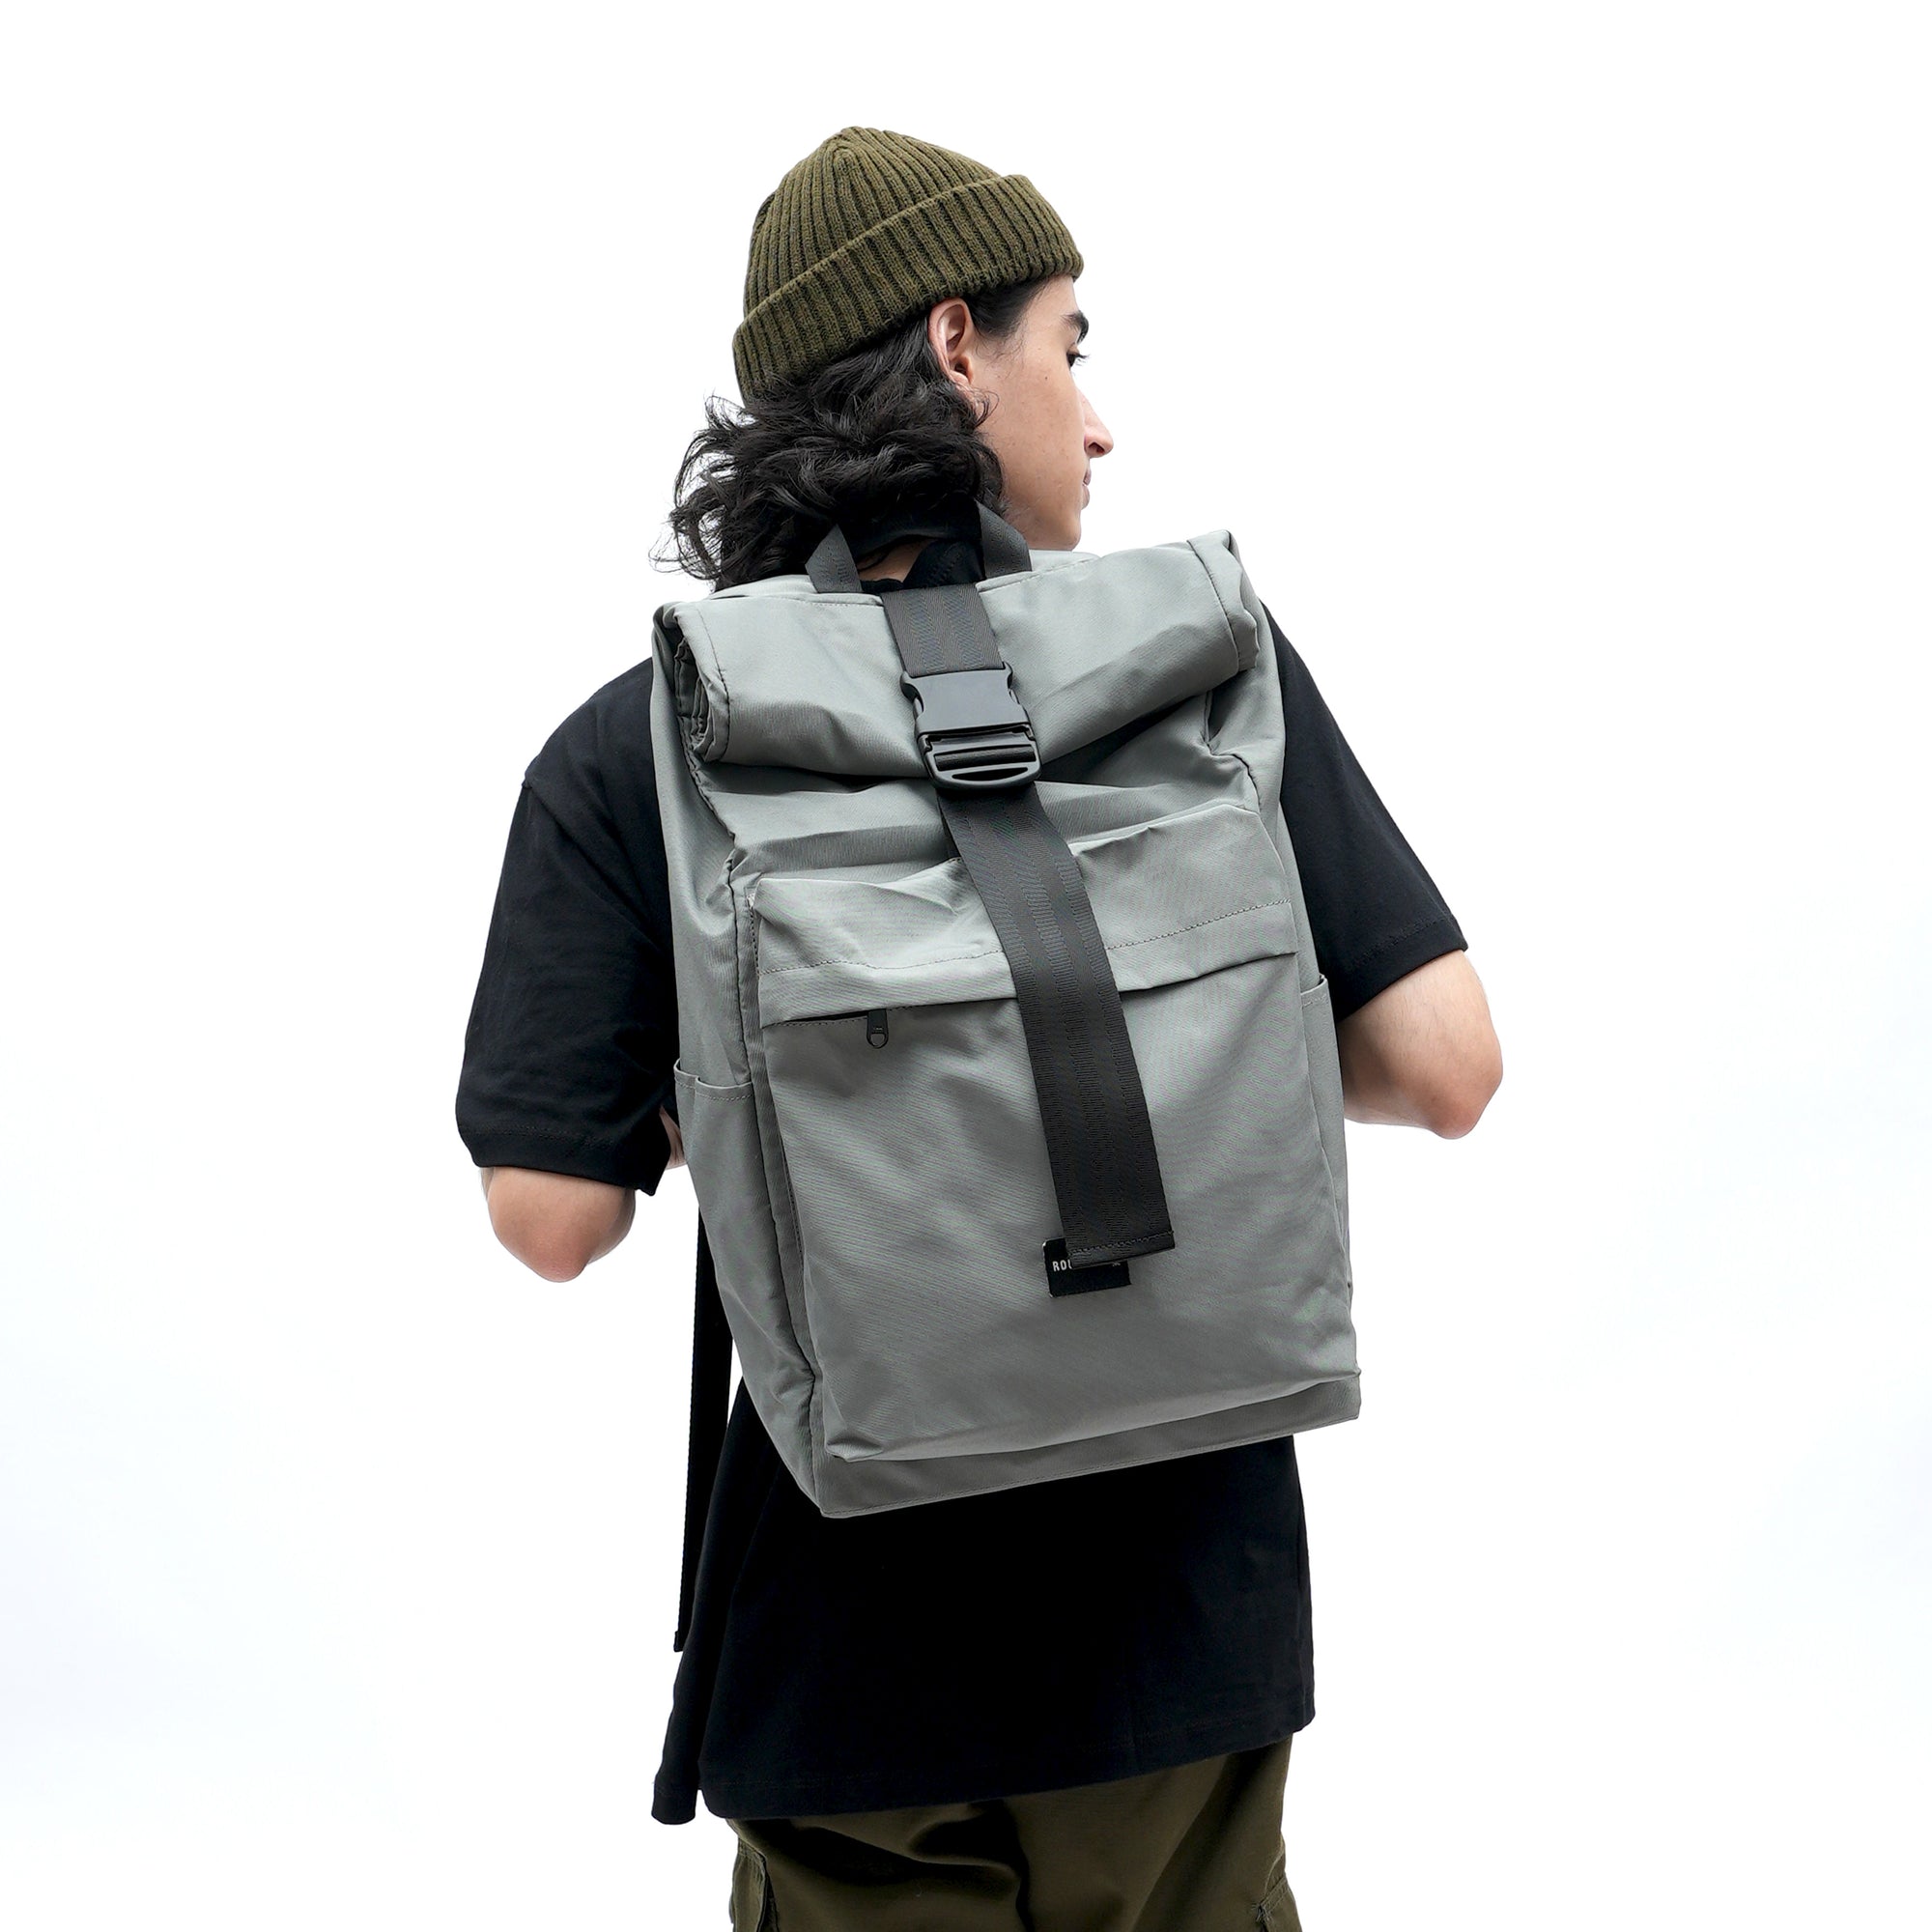 BP026 Grey Macedonia Roll Top Backpack